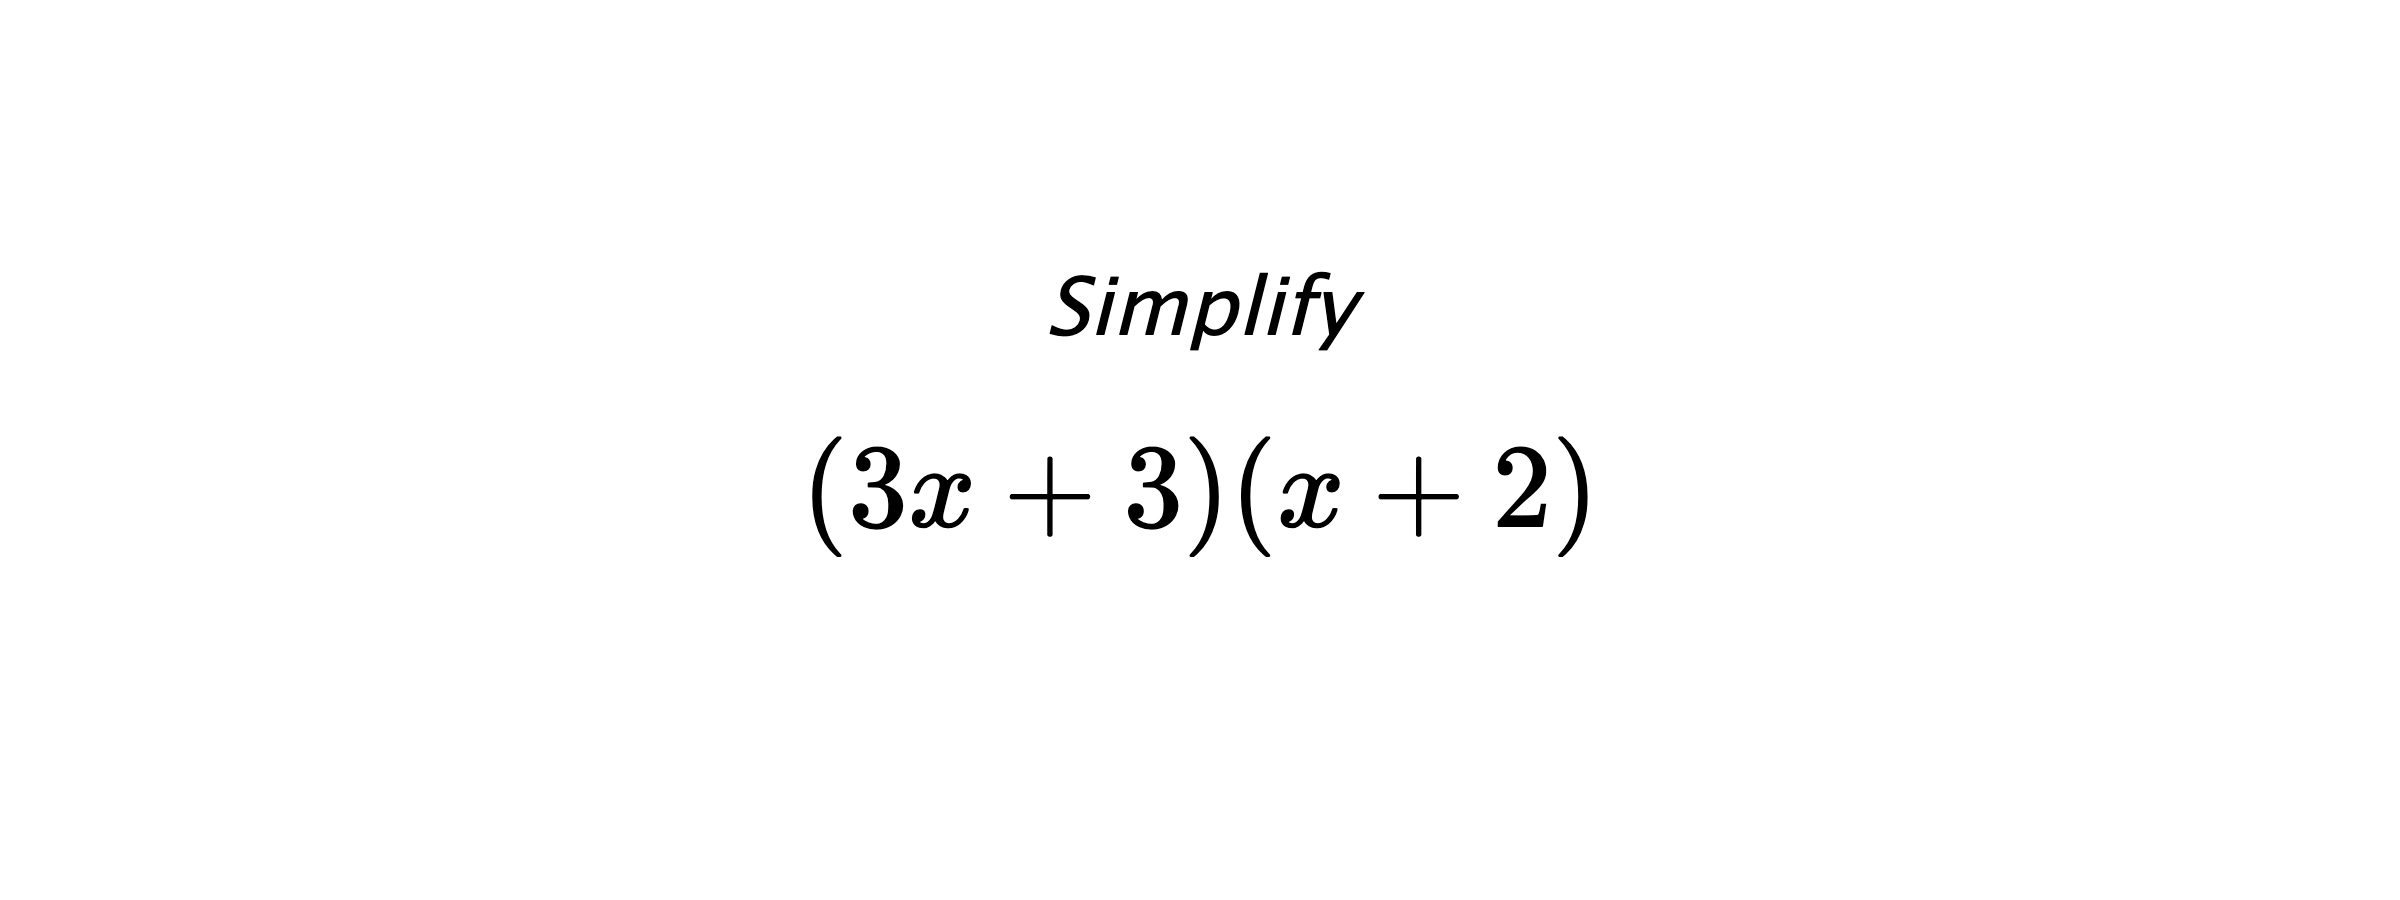 Simplify $$ \left(3x+3) (x+2\right) $$